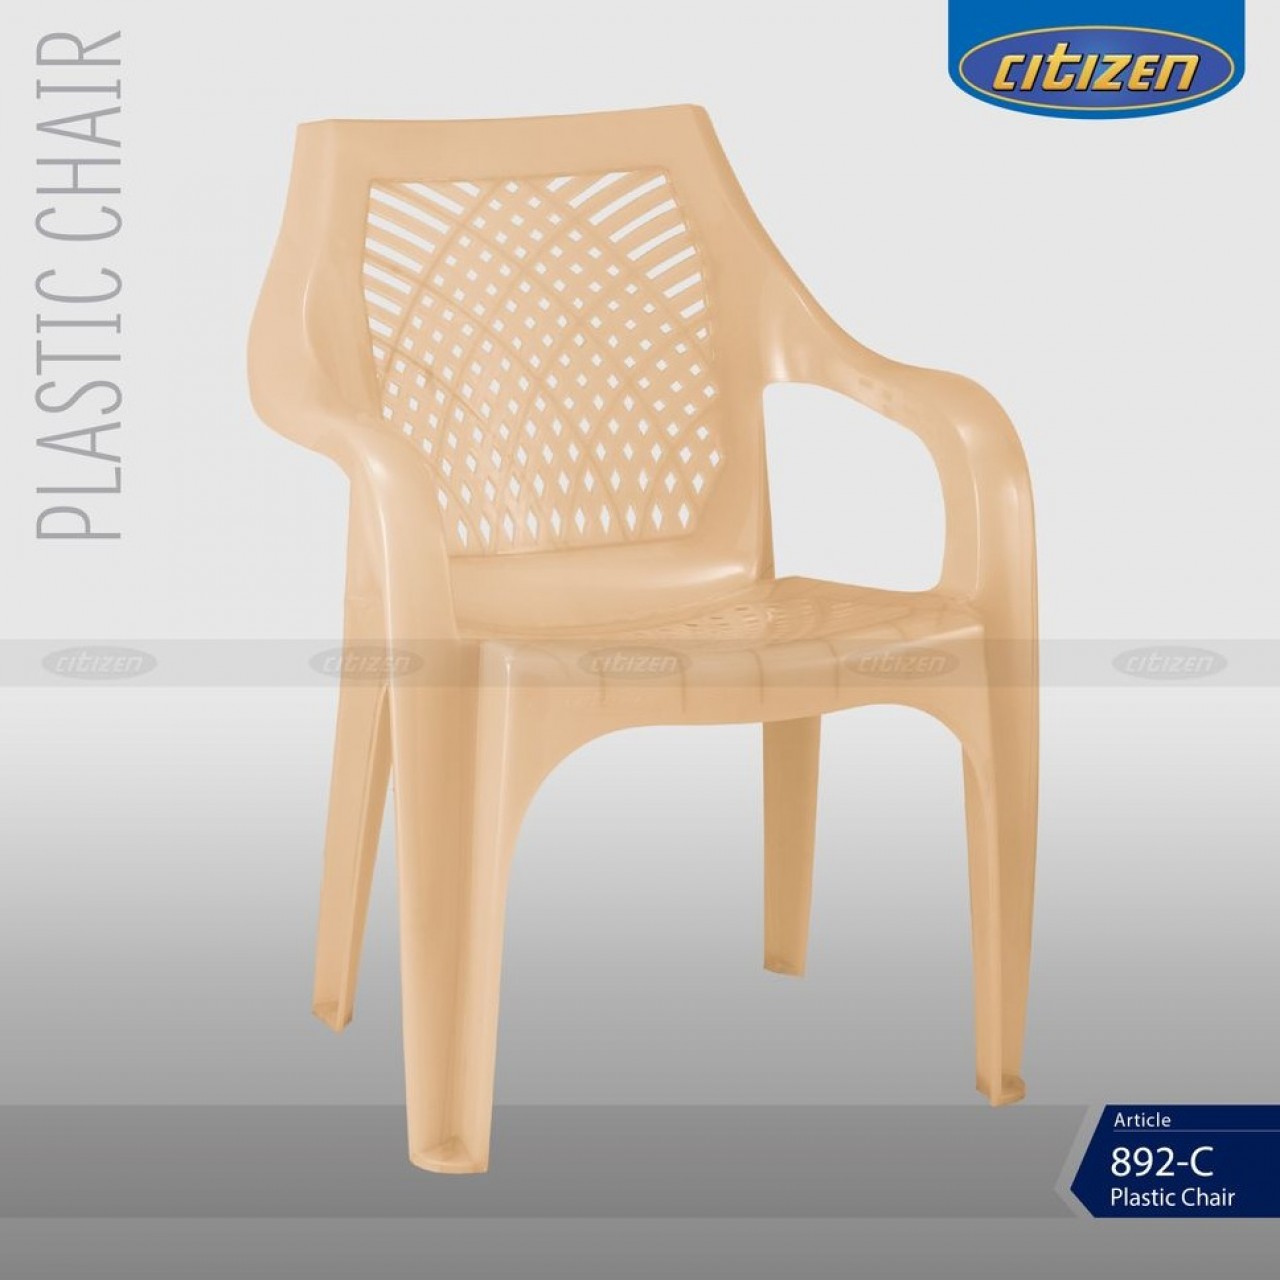 Citizen 892-C Plastic Crystal & Regular Chair